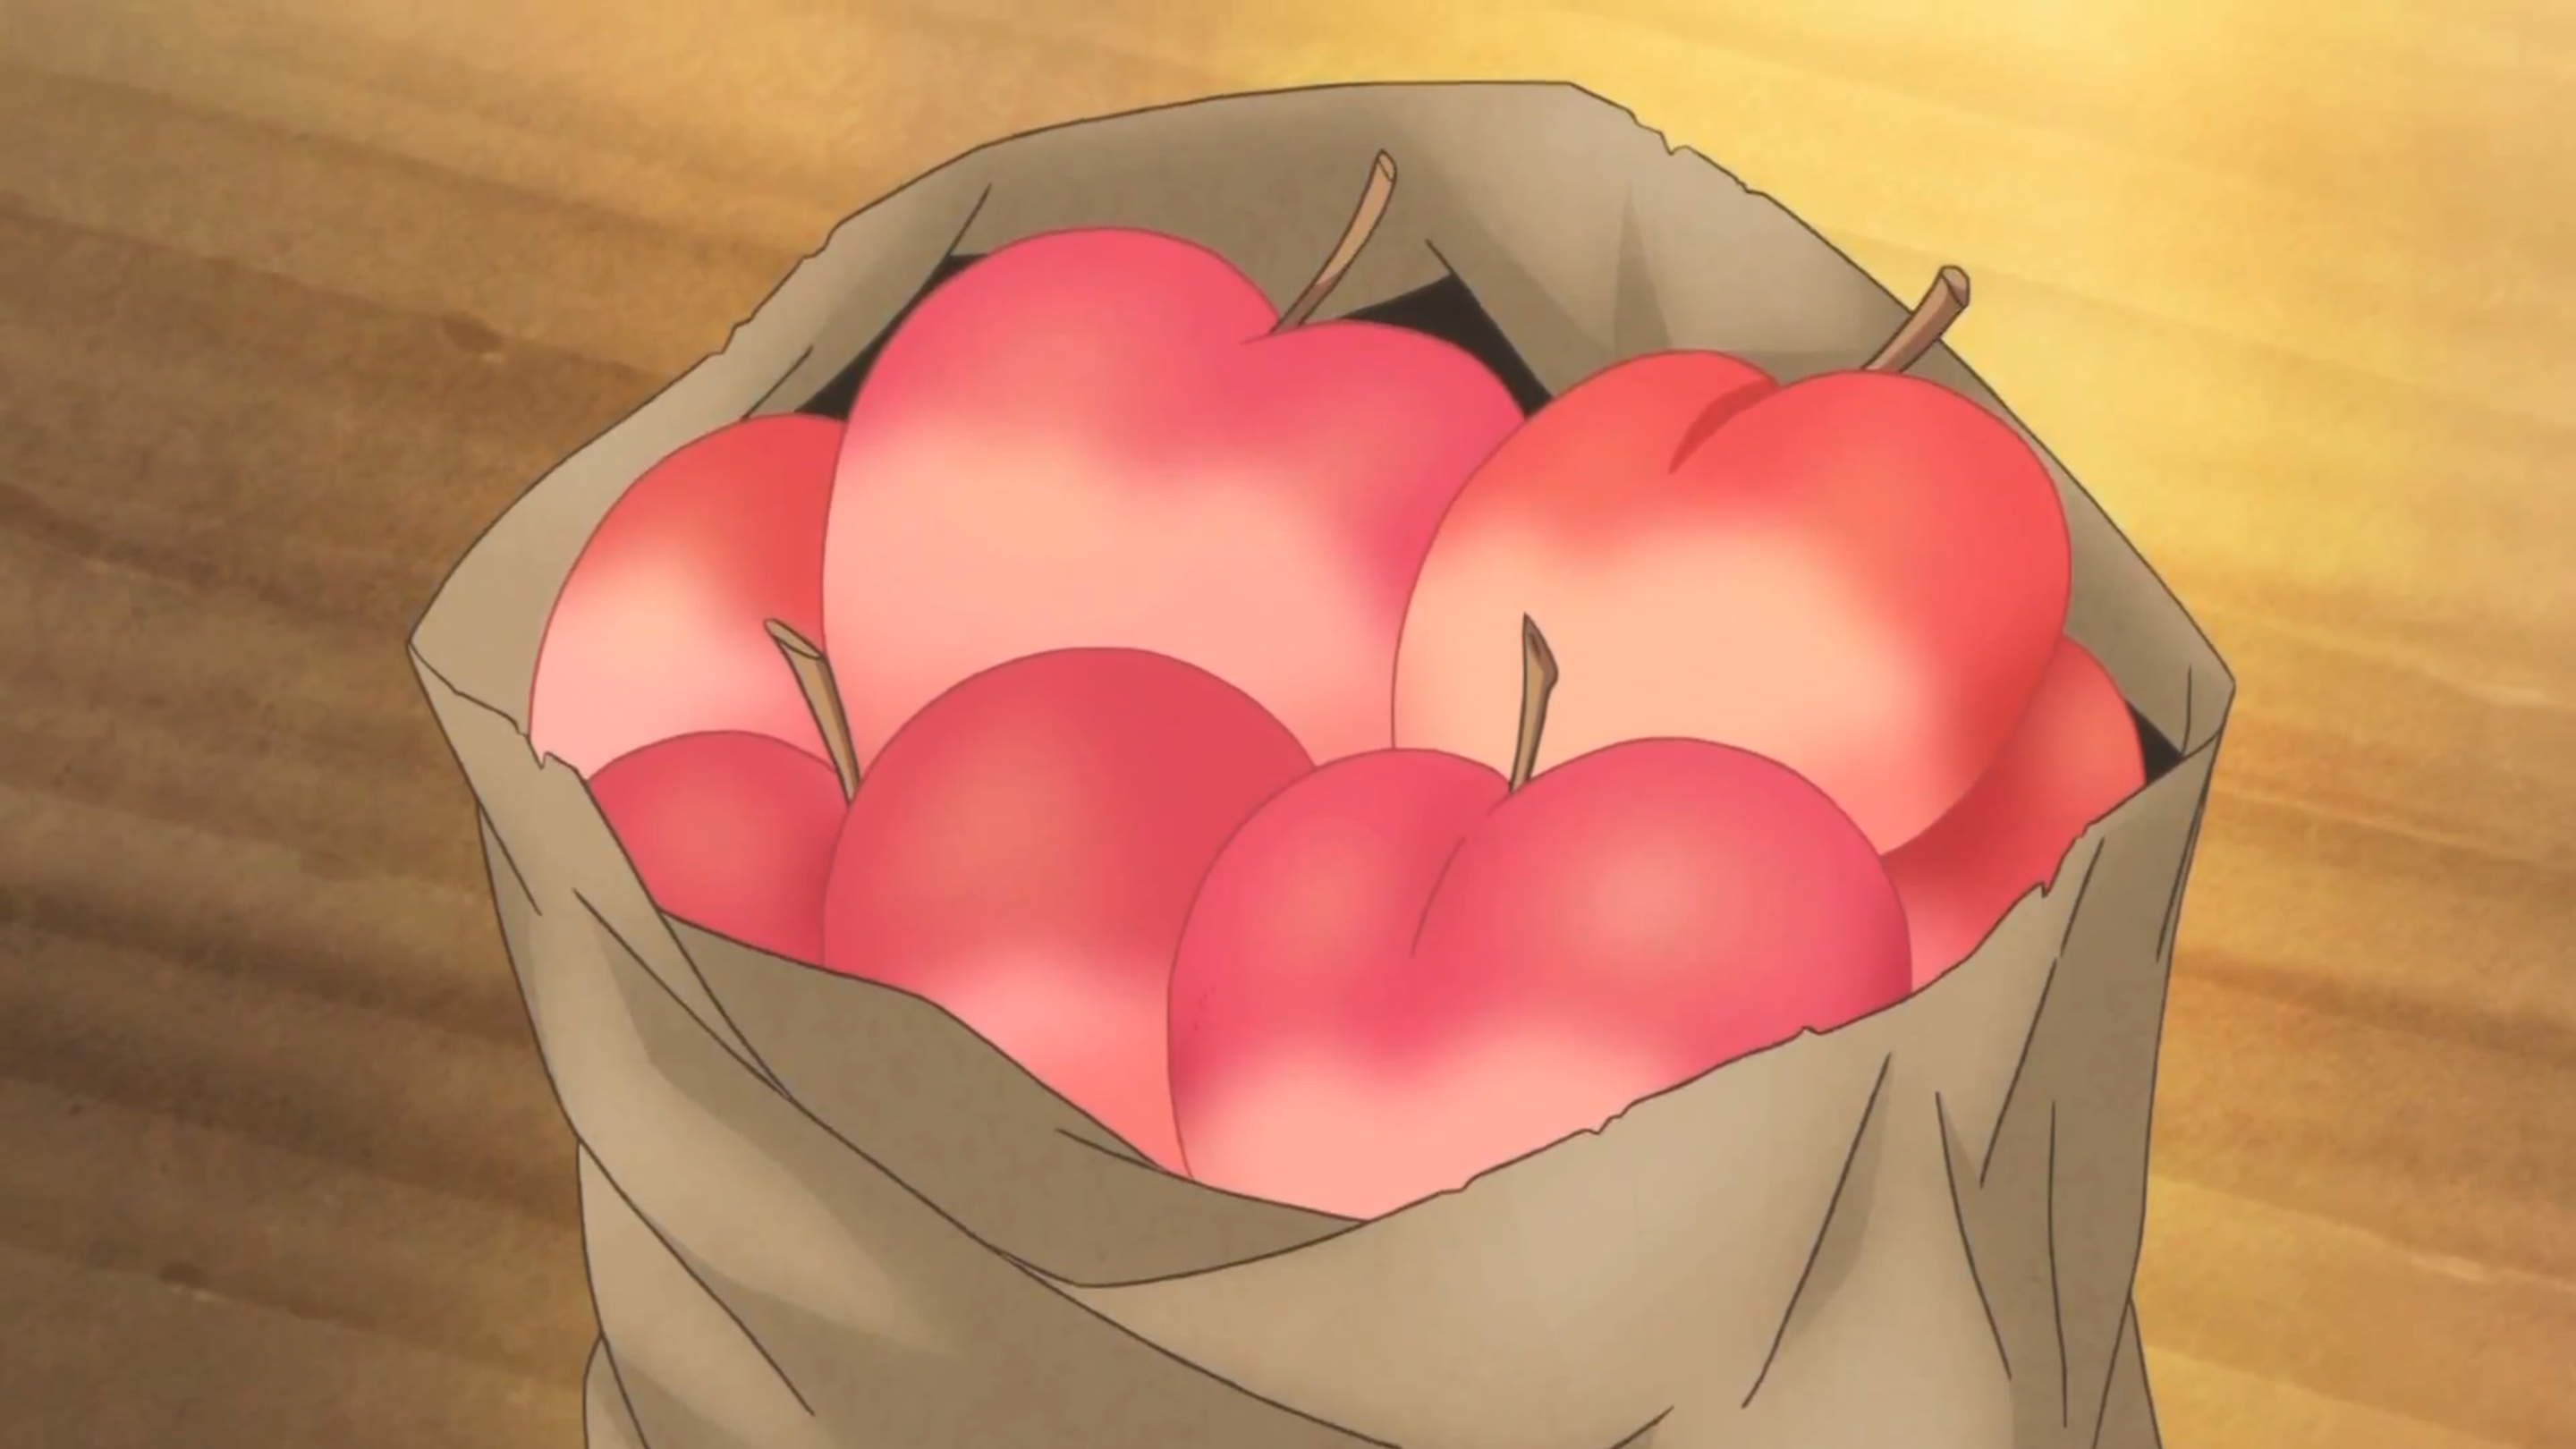 Anime Fruit Images - Free Download on Freepik